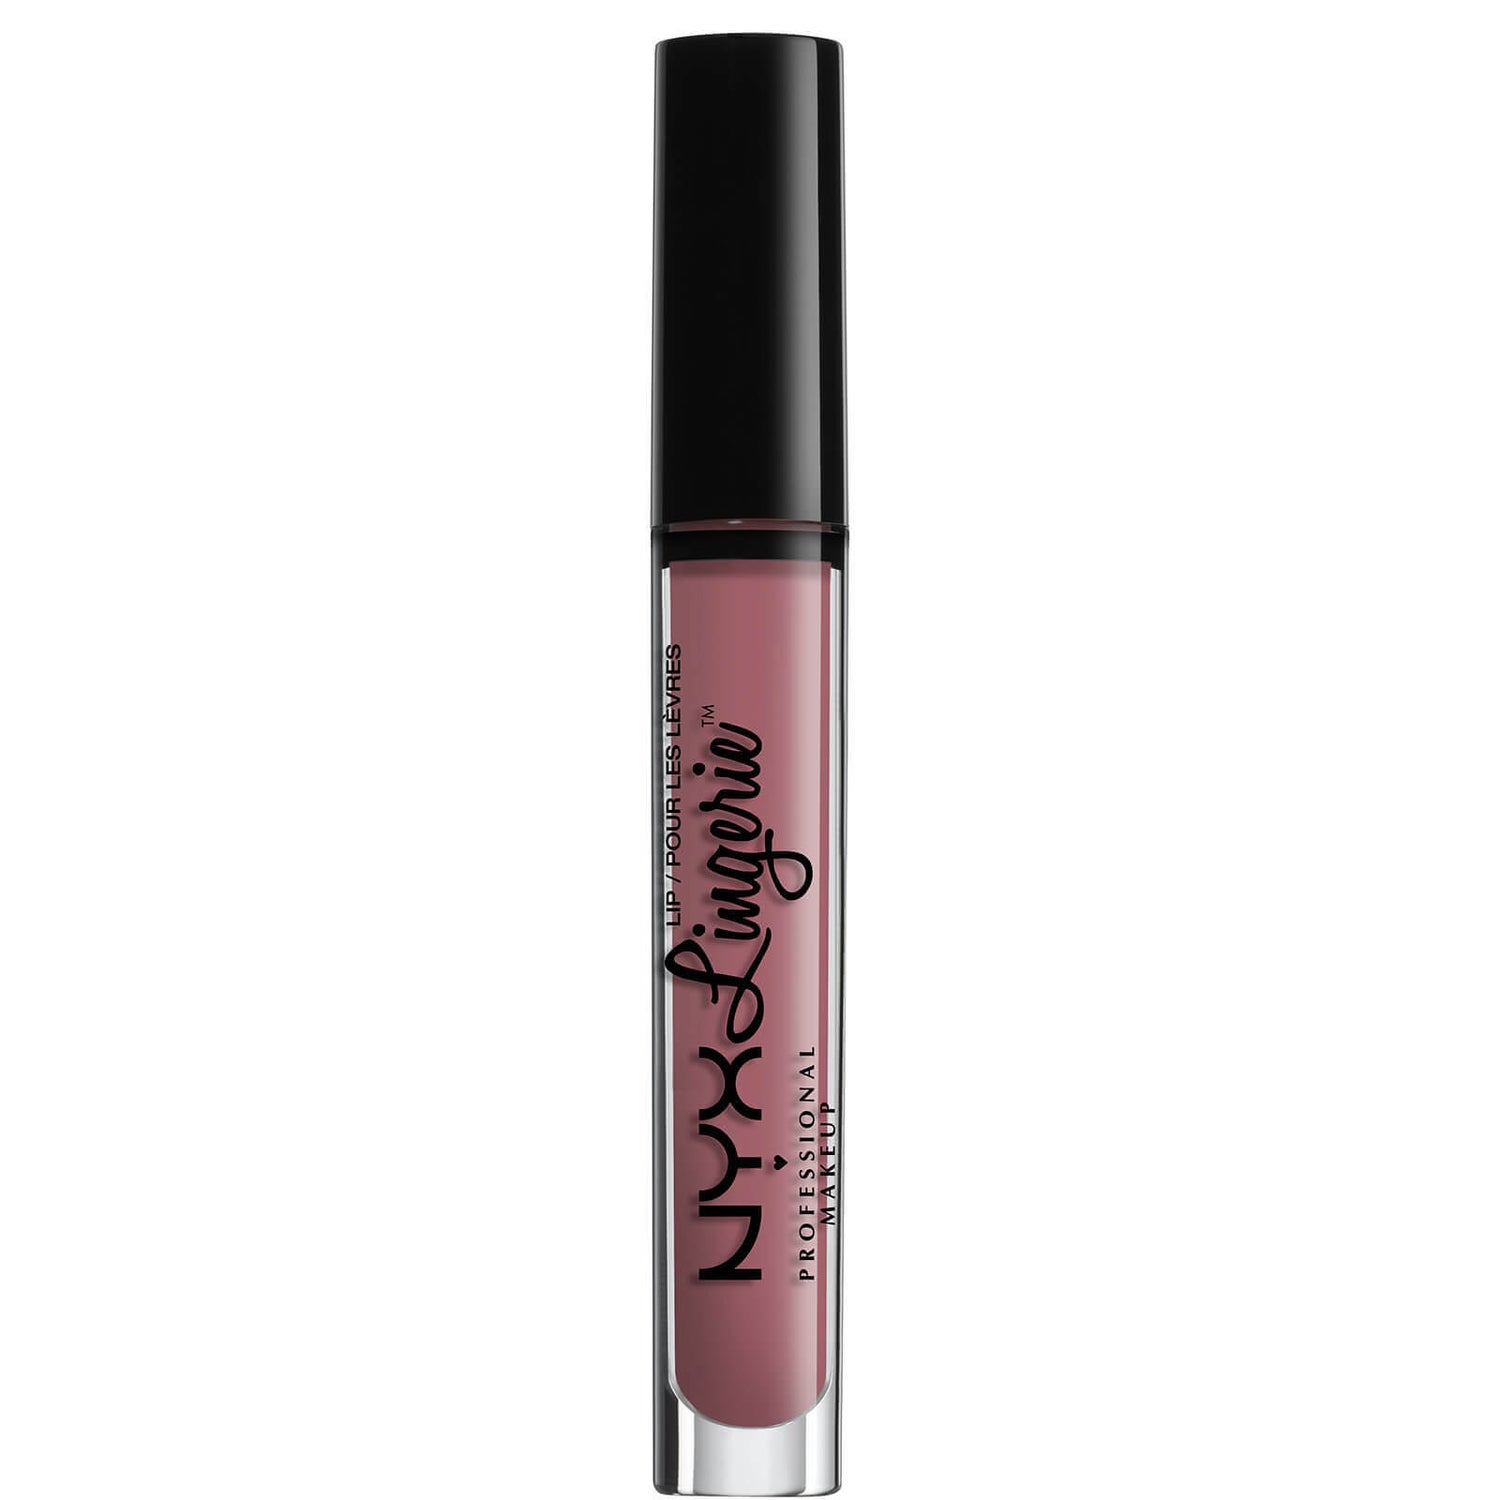 NYX Professional Makeup Lip Lingerie Liquid Lipstick (olika nyanser)